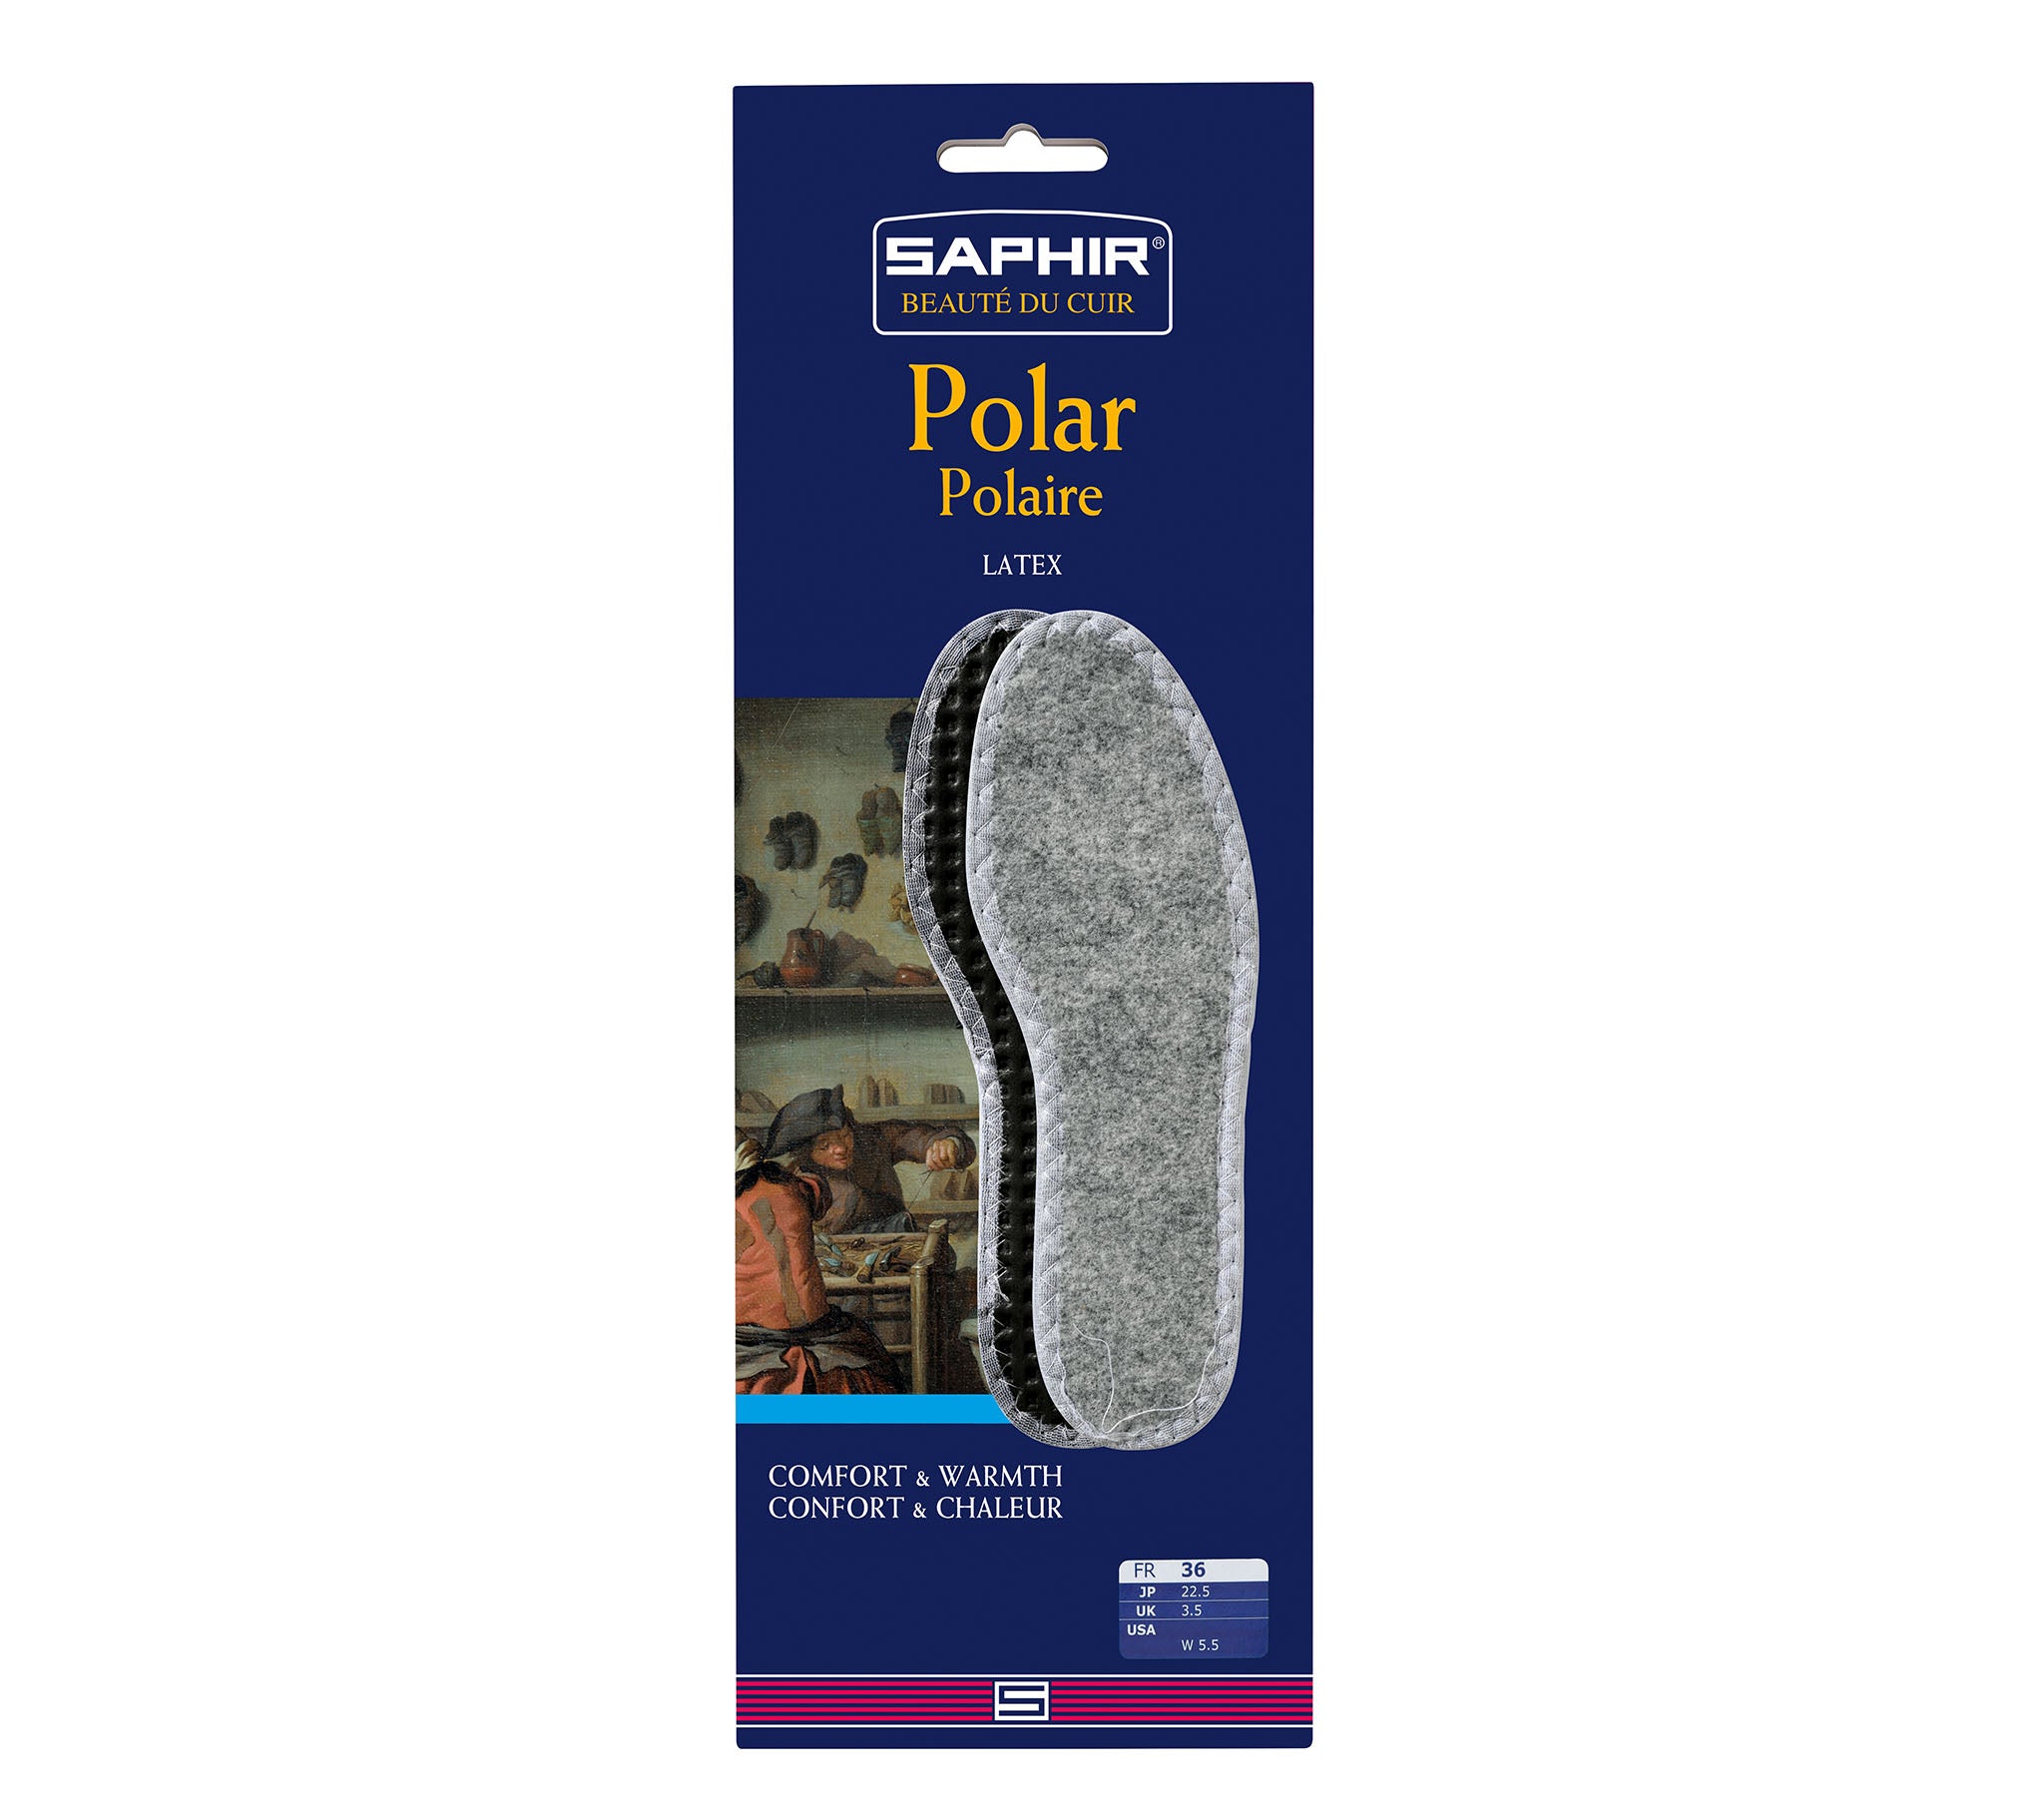 Polar Insoles